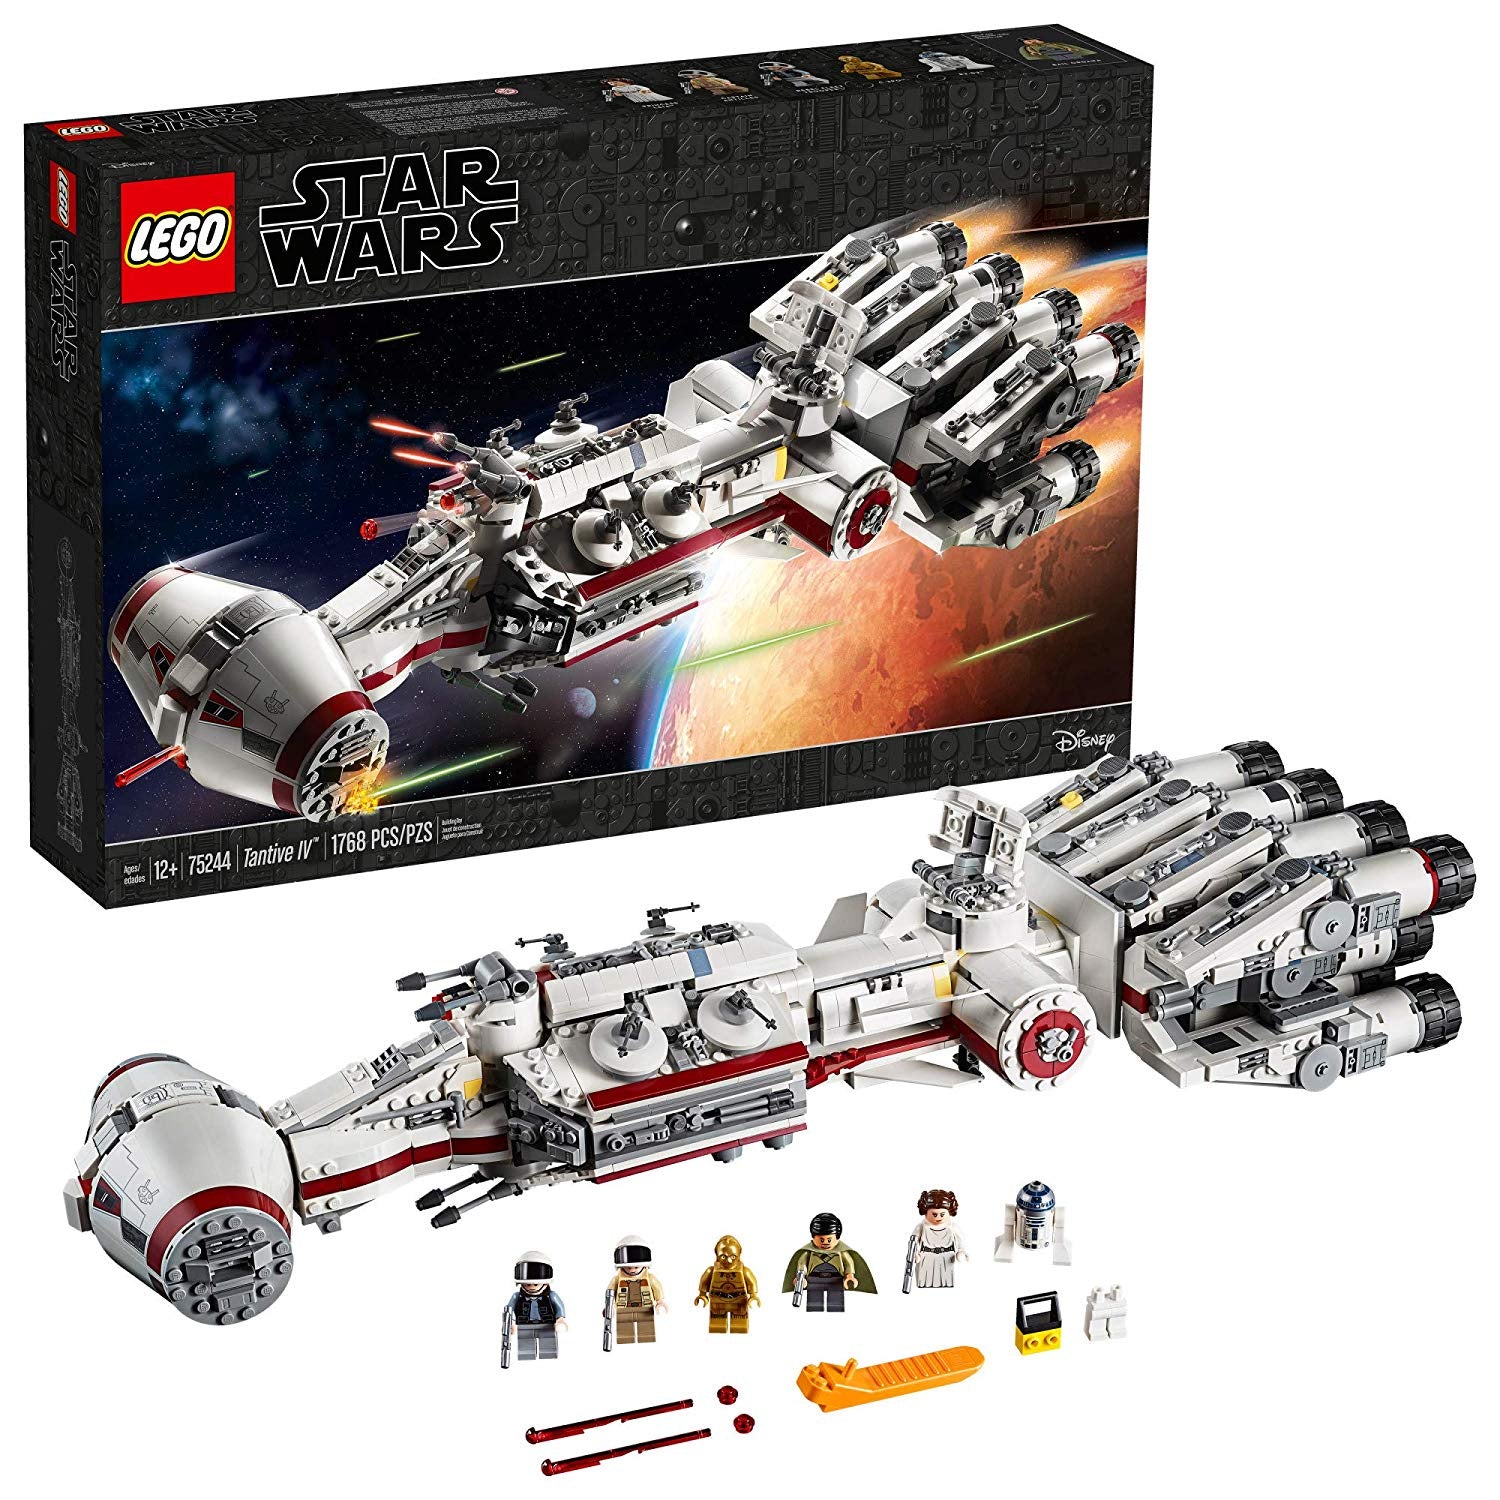 Lego Star Wars: Tantive IV 75244 (Box has some crushing)